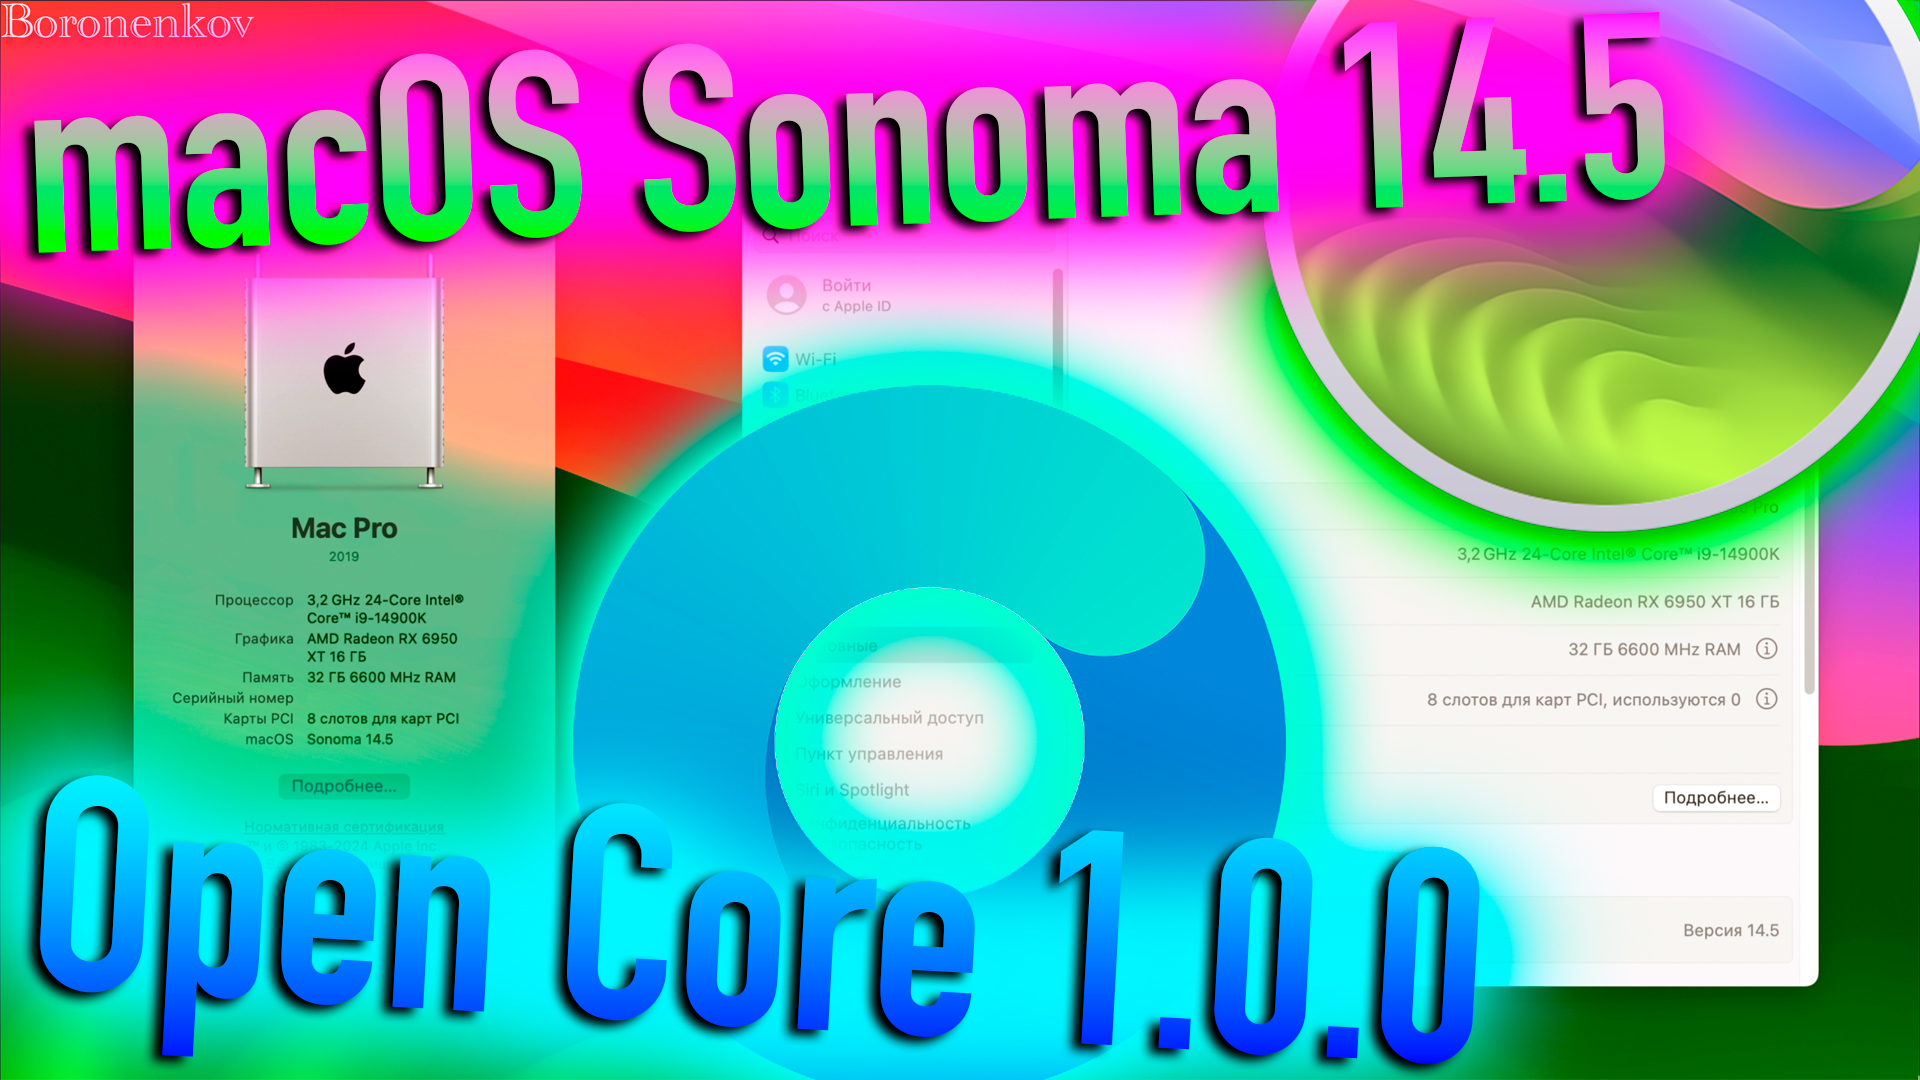 MACOS SONOMA 14.5 | OPEN CORE 1.0.0 | HACKINTOSH - ALEXEY BORONENKOV | 4K